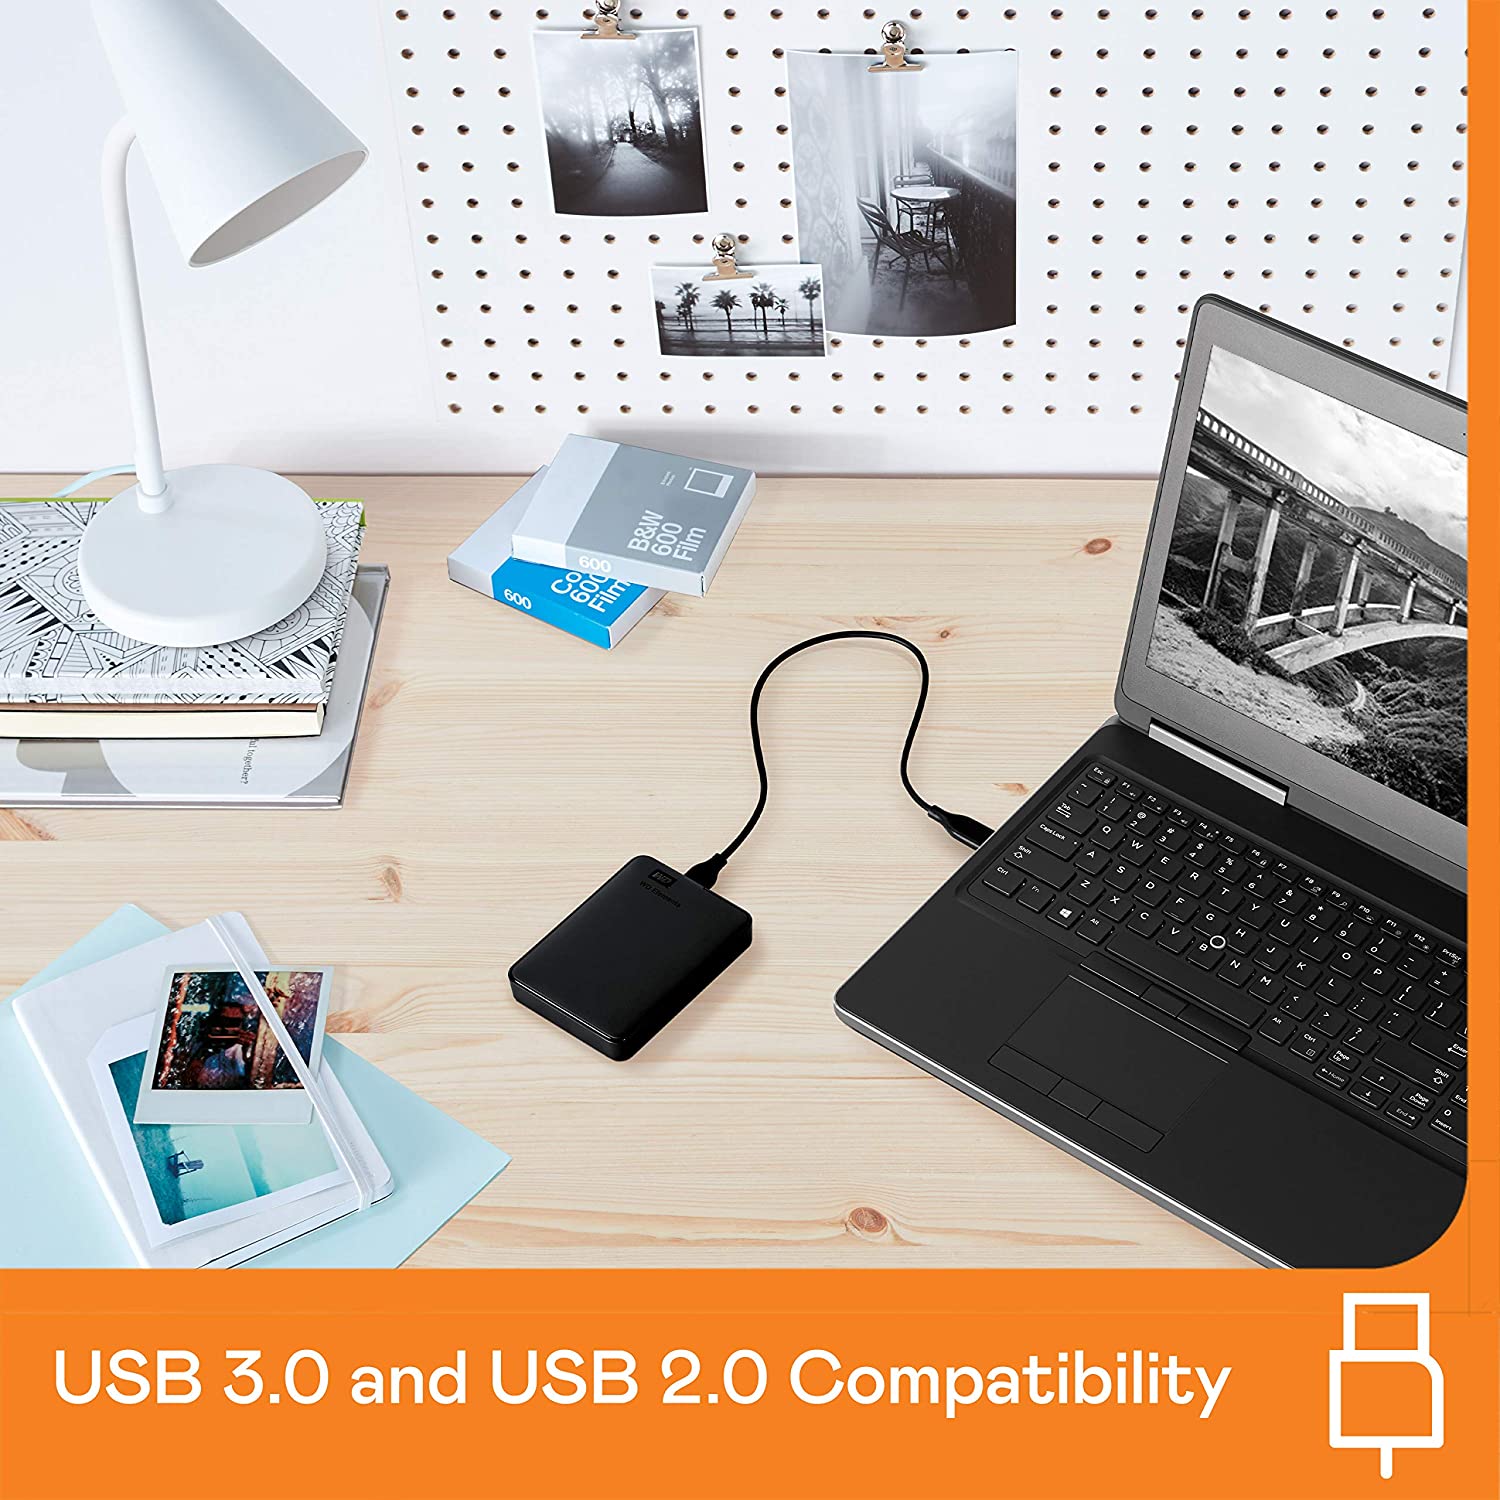 Western Digital 5 TB Elements Portable External Hard Drive - USB 3.0, Black